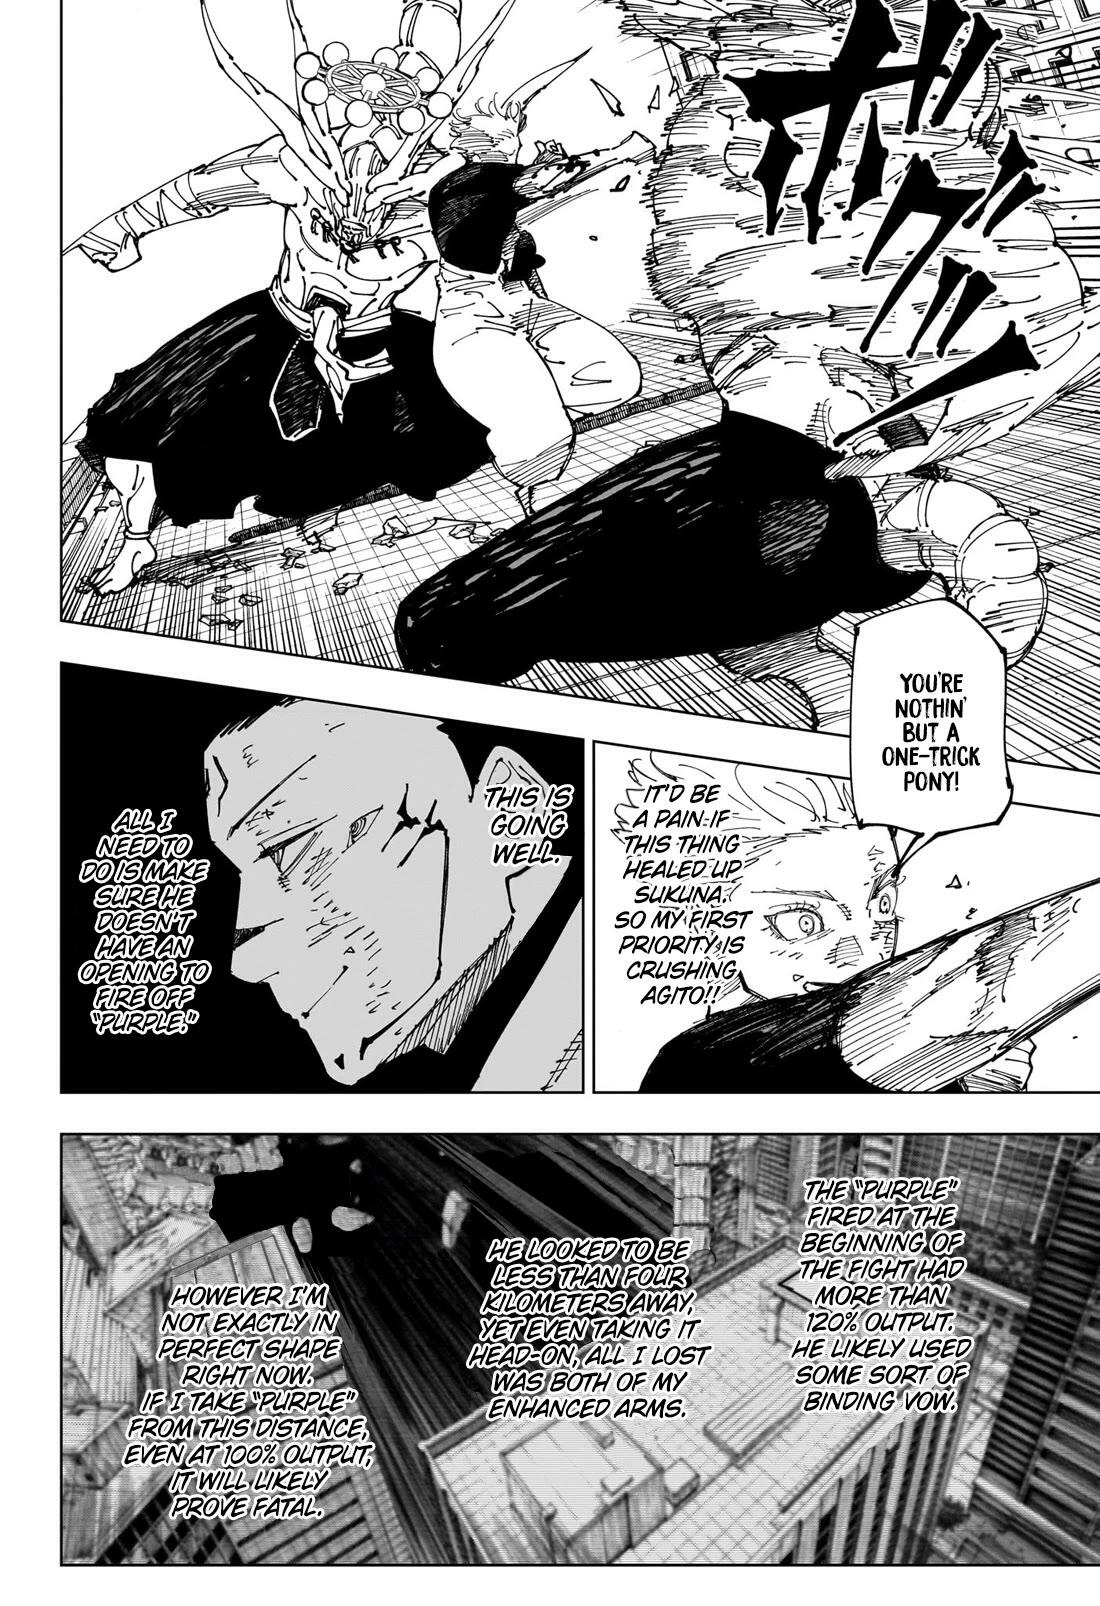 Jujutsu Kaisen Chapter 234: The Decisive Battle In The Uninhabited, Demon-Infested Shinjuku ⑫ page 11 - Mangakakalot